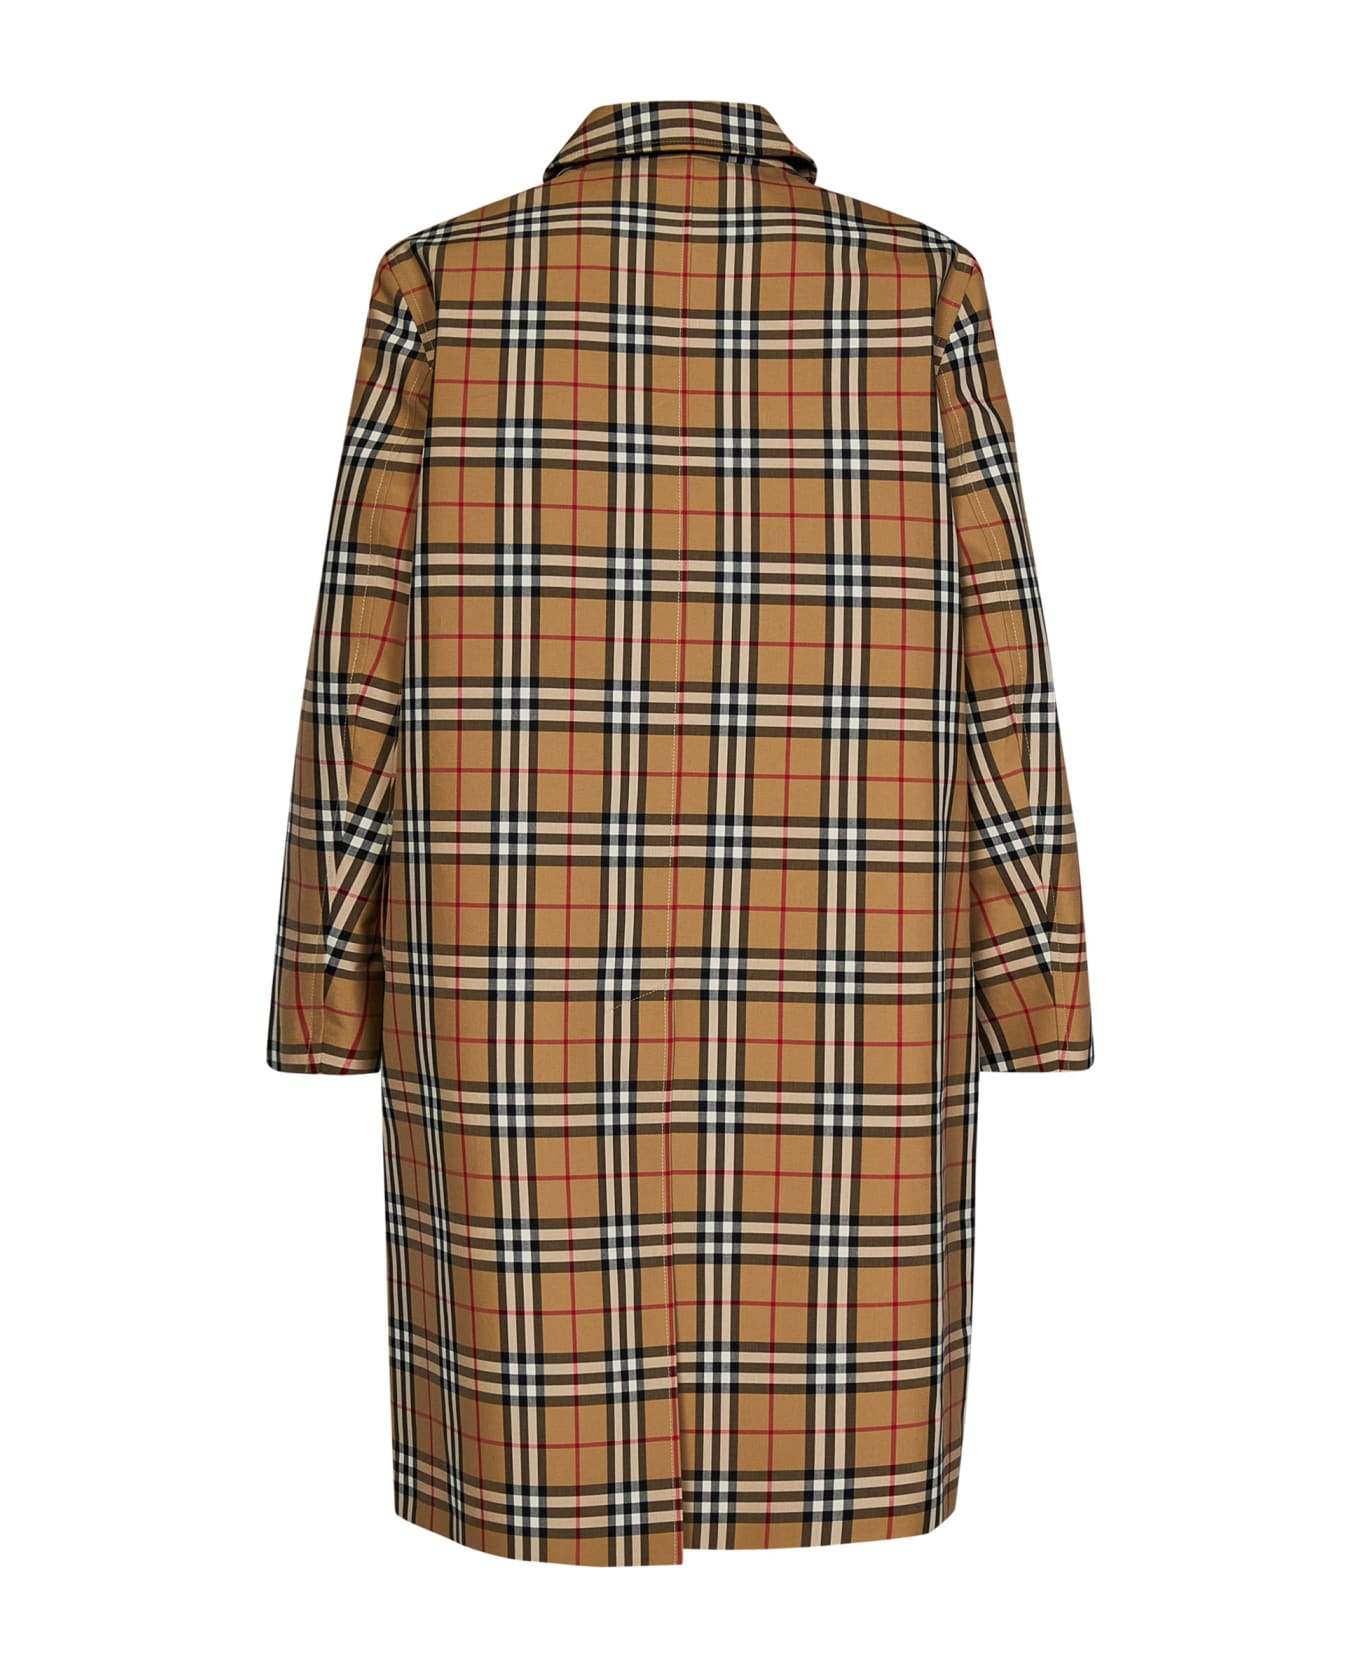 Burberry 'brookvale' Beige Coat With All-over Vintage Check Motif In Cotton Blend Man - Beige コート